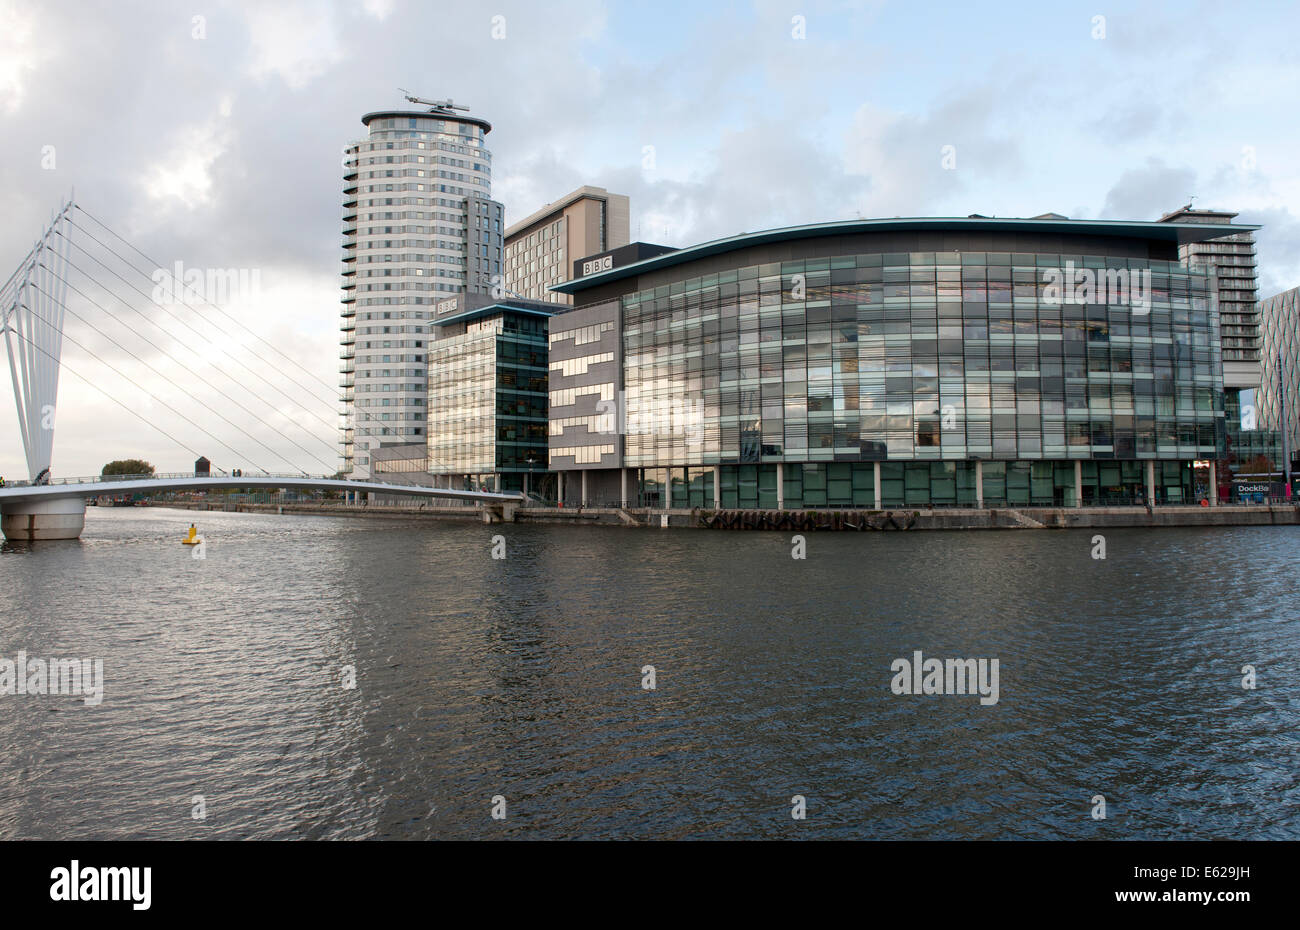 BBC Studios Mediacity at Salford Quays, Manchester, England, UK Stock Photo